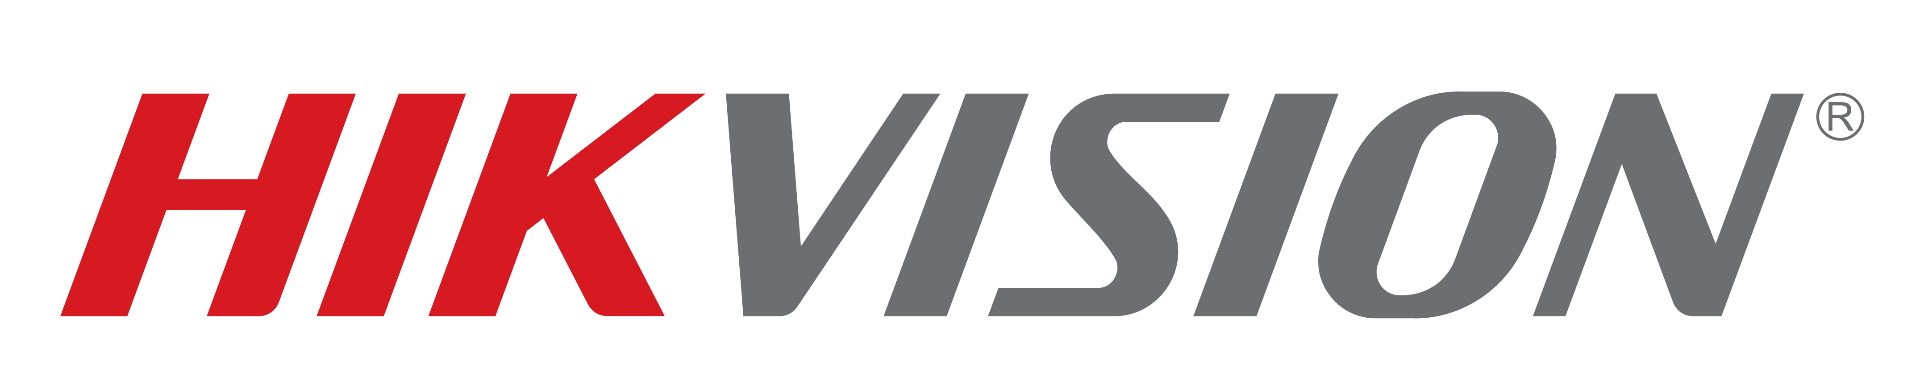 hikvision logotipas